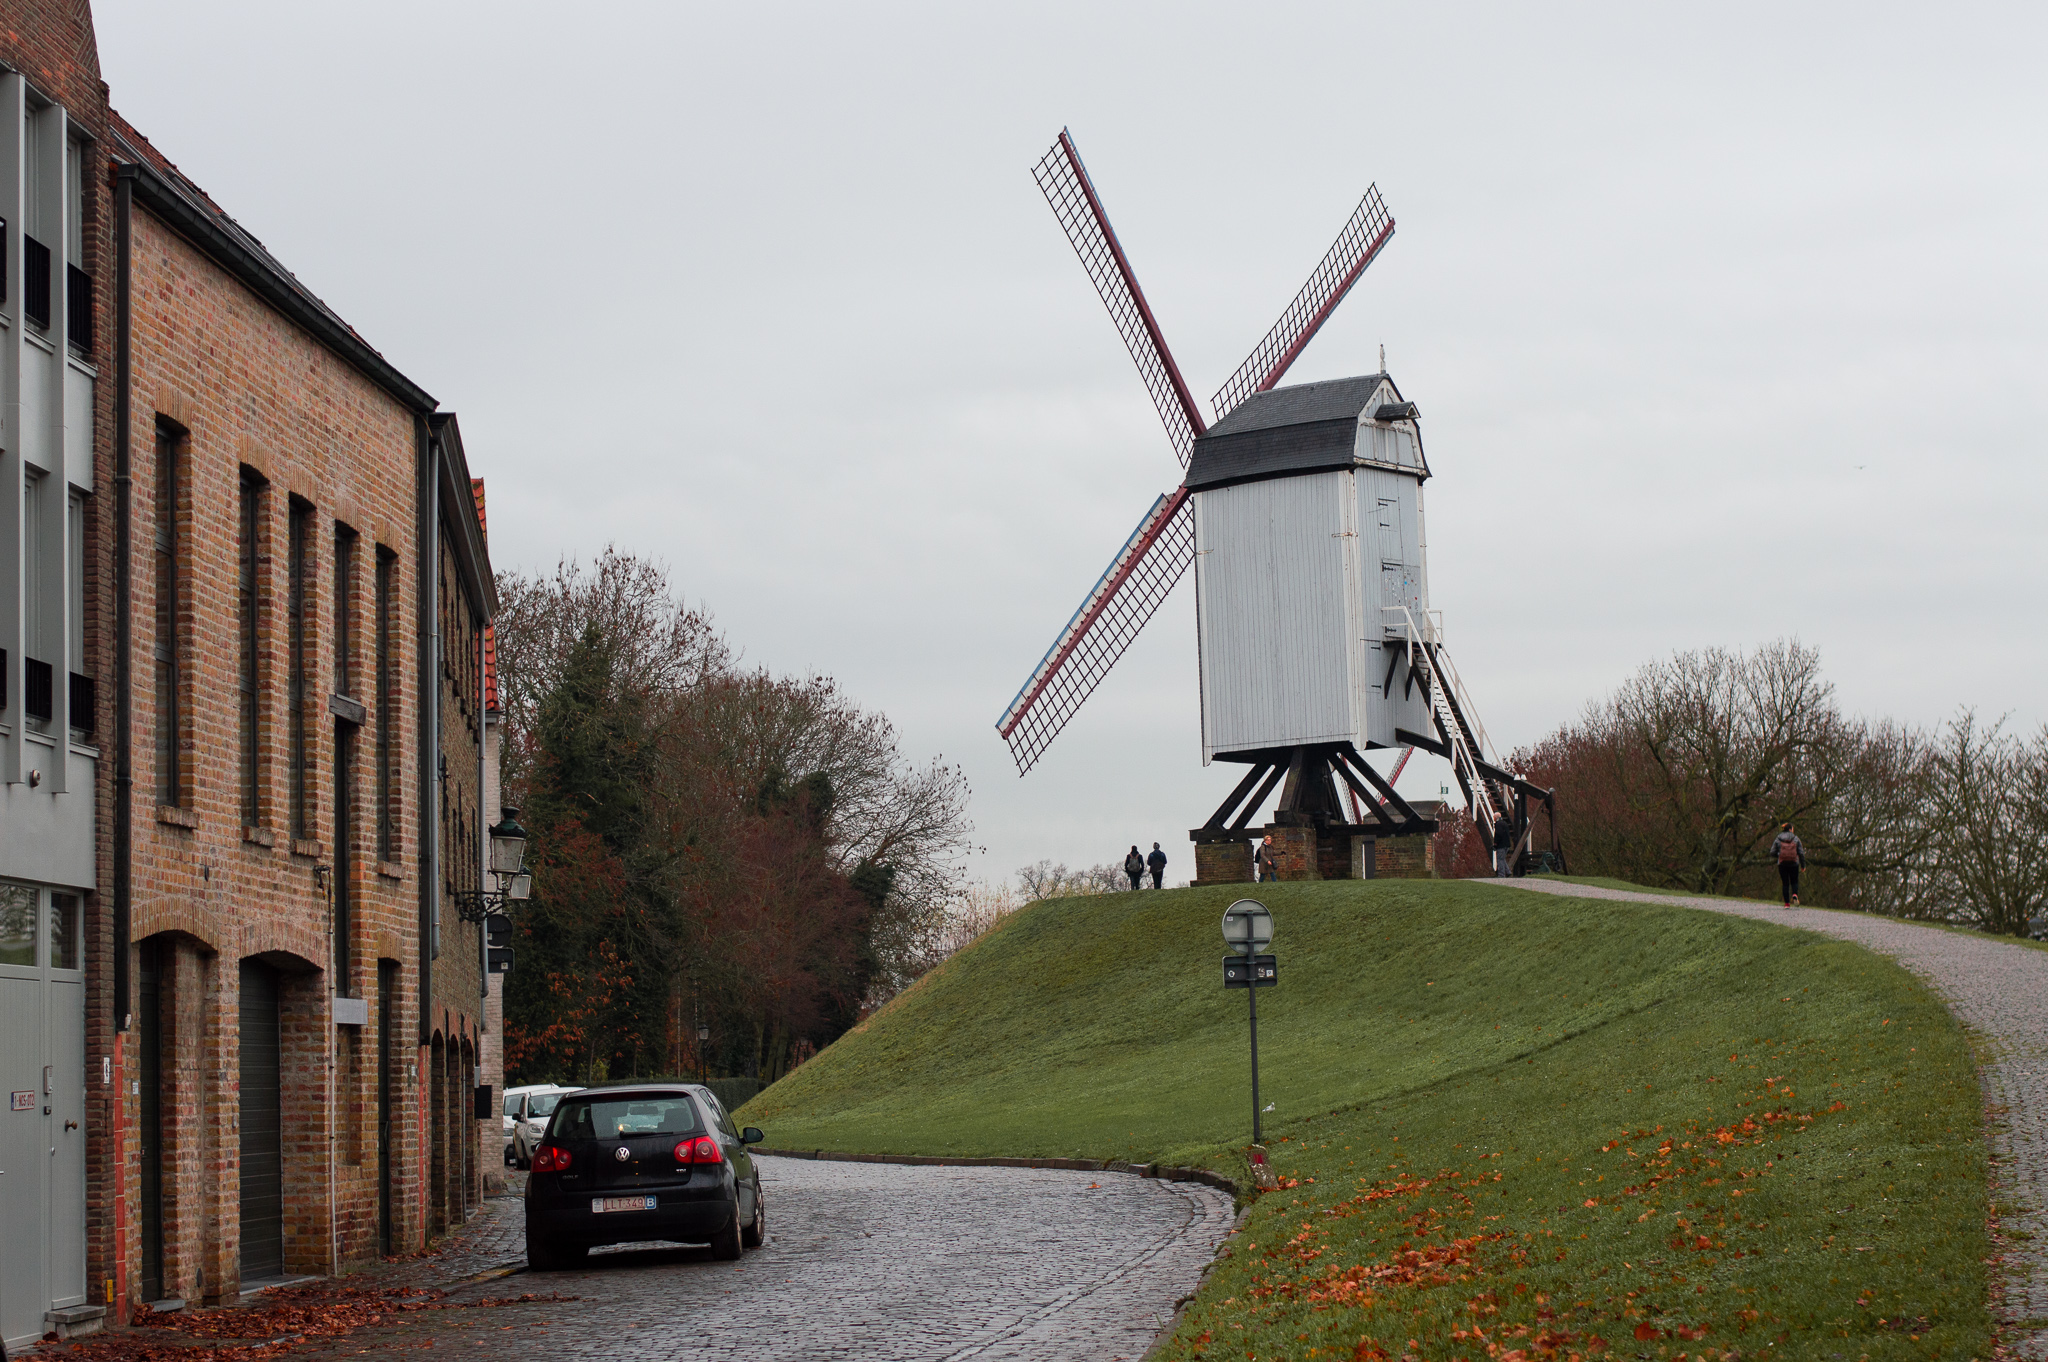 View of the Bonne Chieremolen windmill in Bruges, Belgium